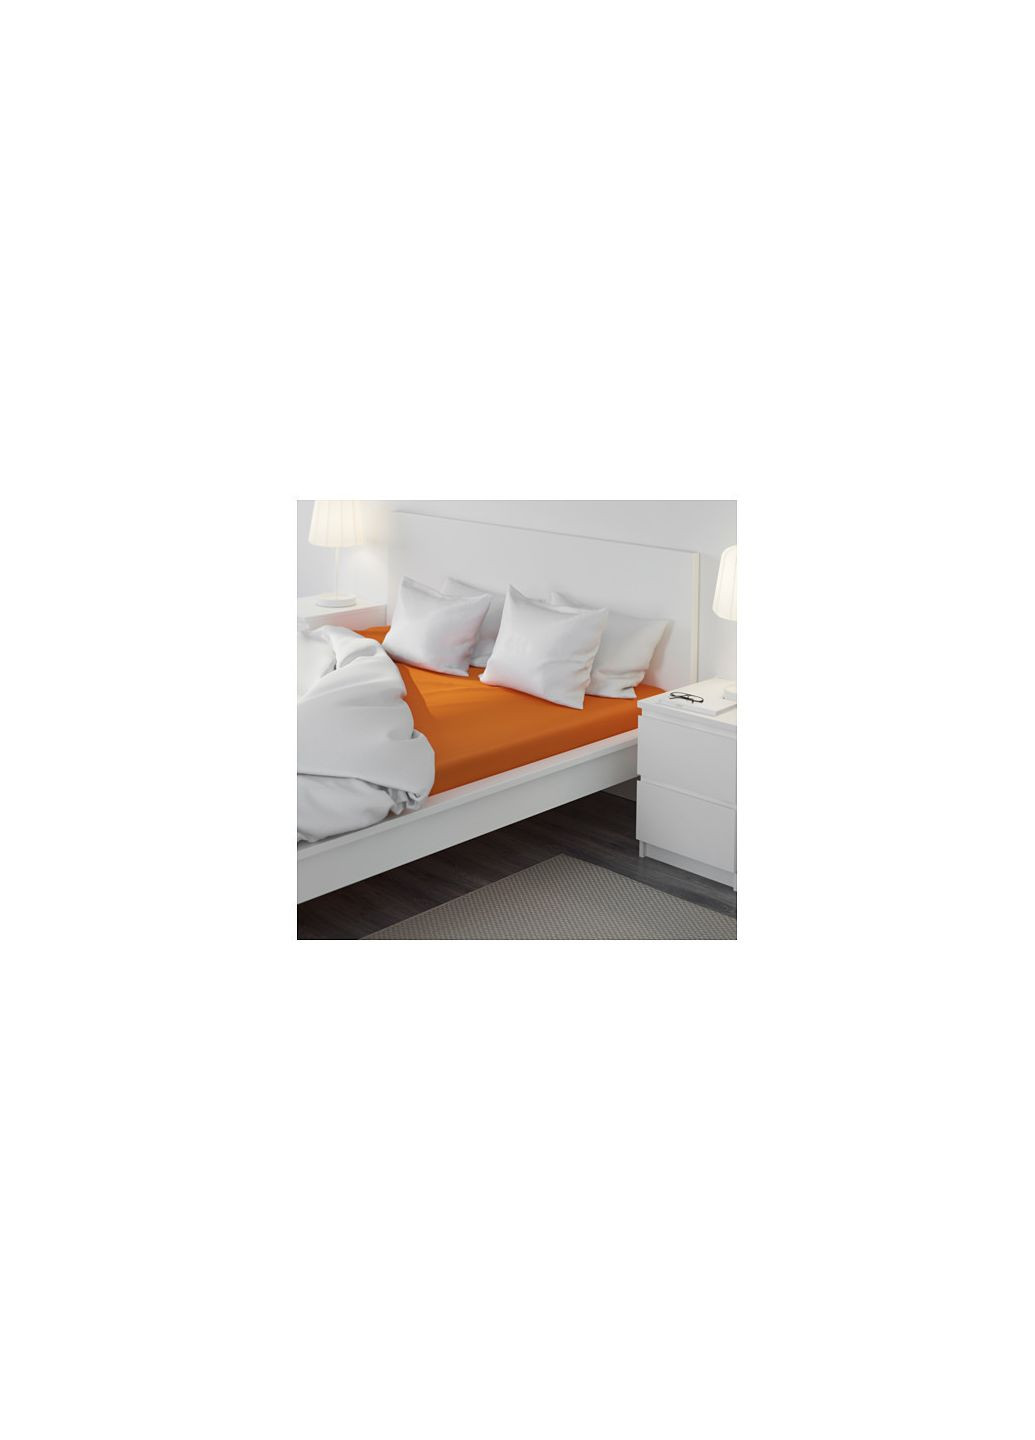 Простыня натяжная оранжевый 160х200 IKEA (272150107)